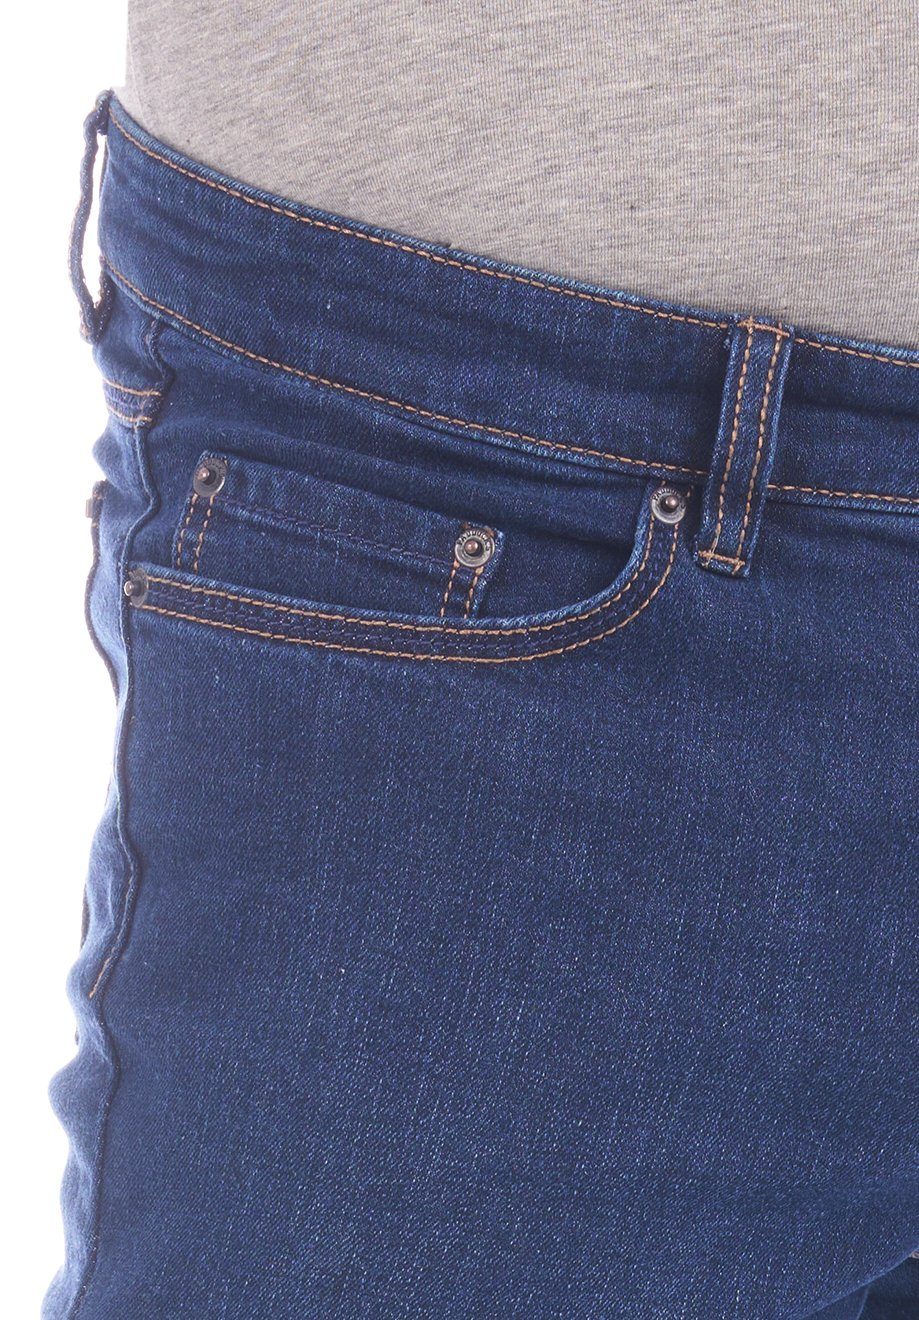 Paddock's Slim-fit-Jeans Herren Jeanshose Ranger Slim mit Hose Fit Stone Pipe Denim Stretch (4318) Night